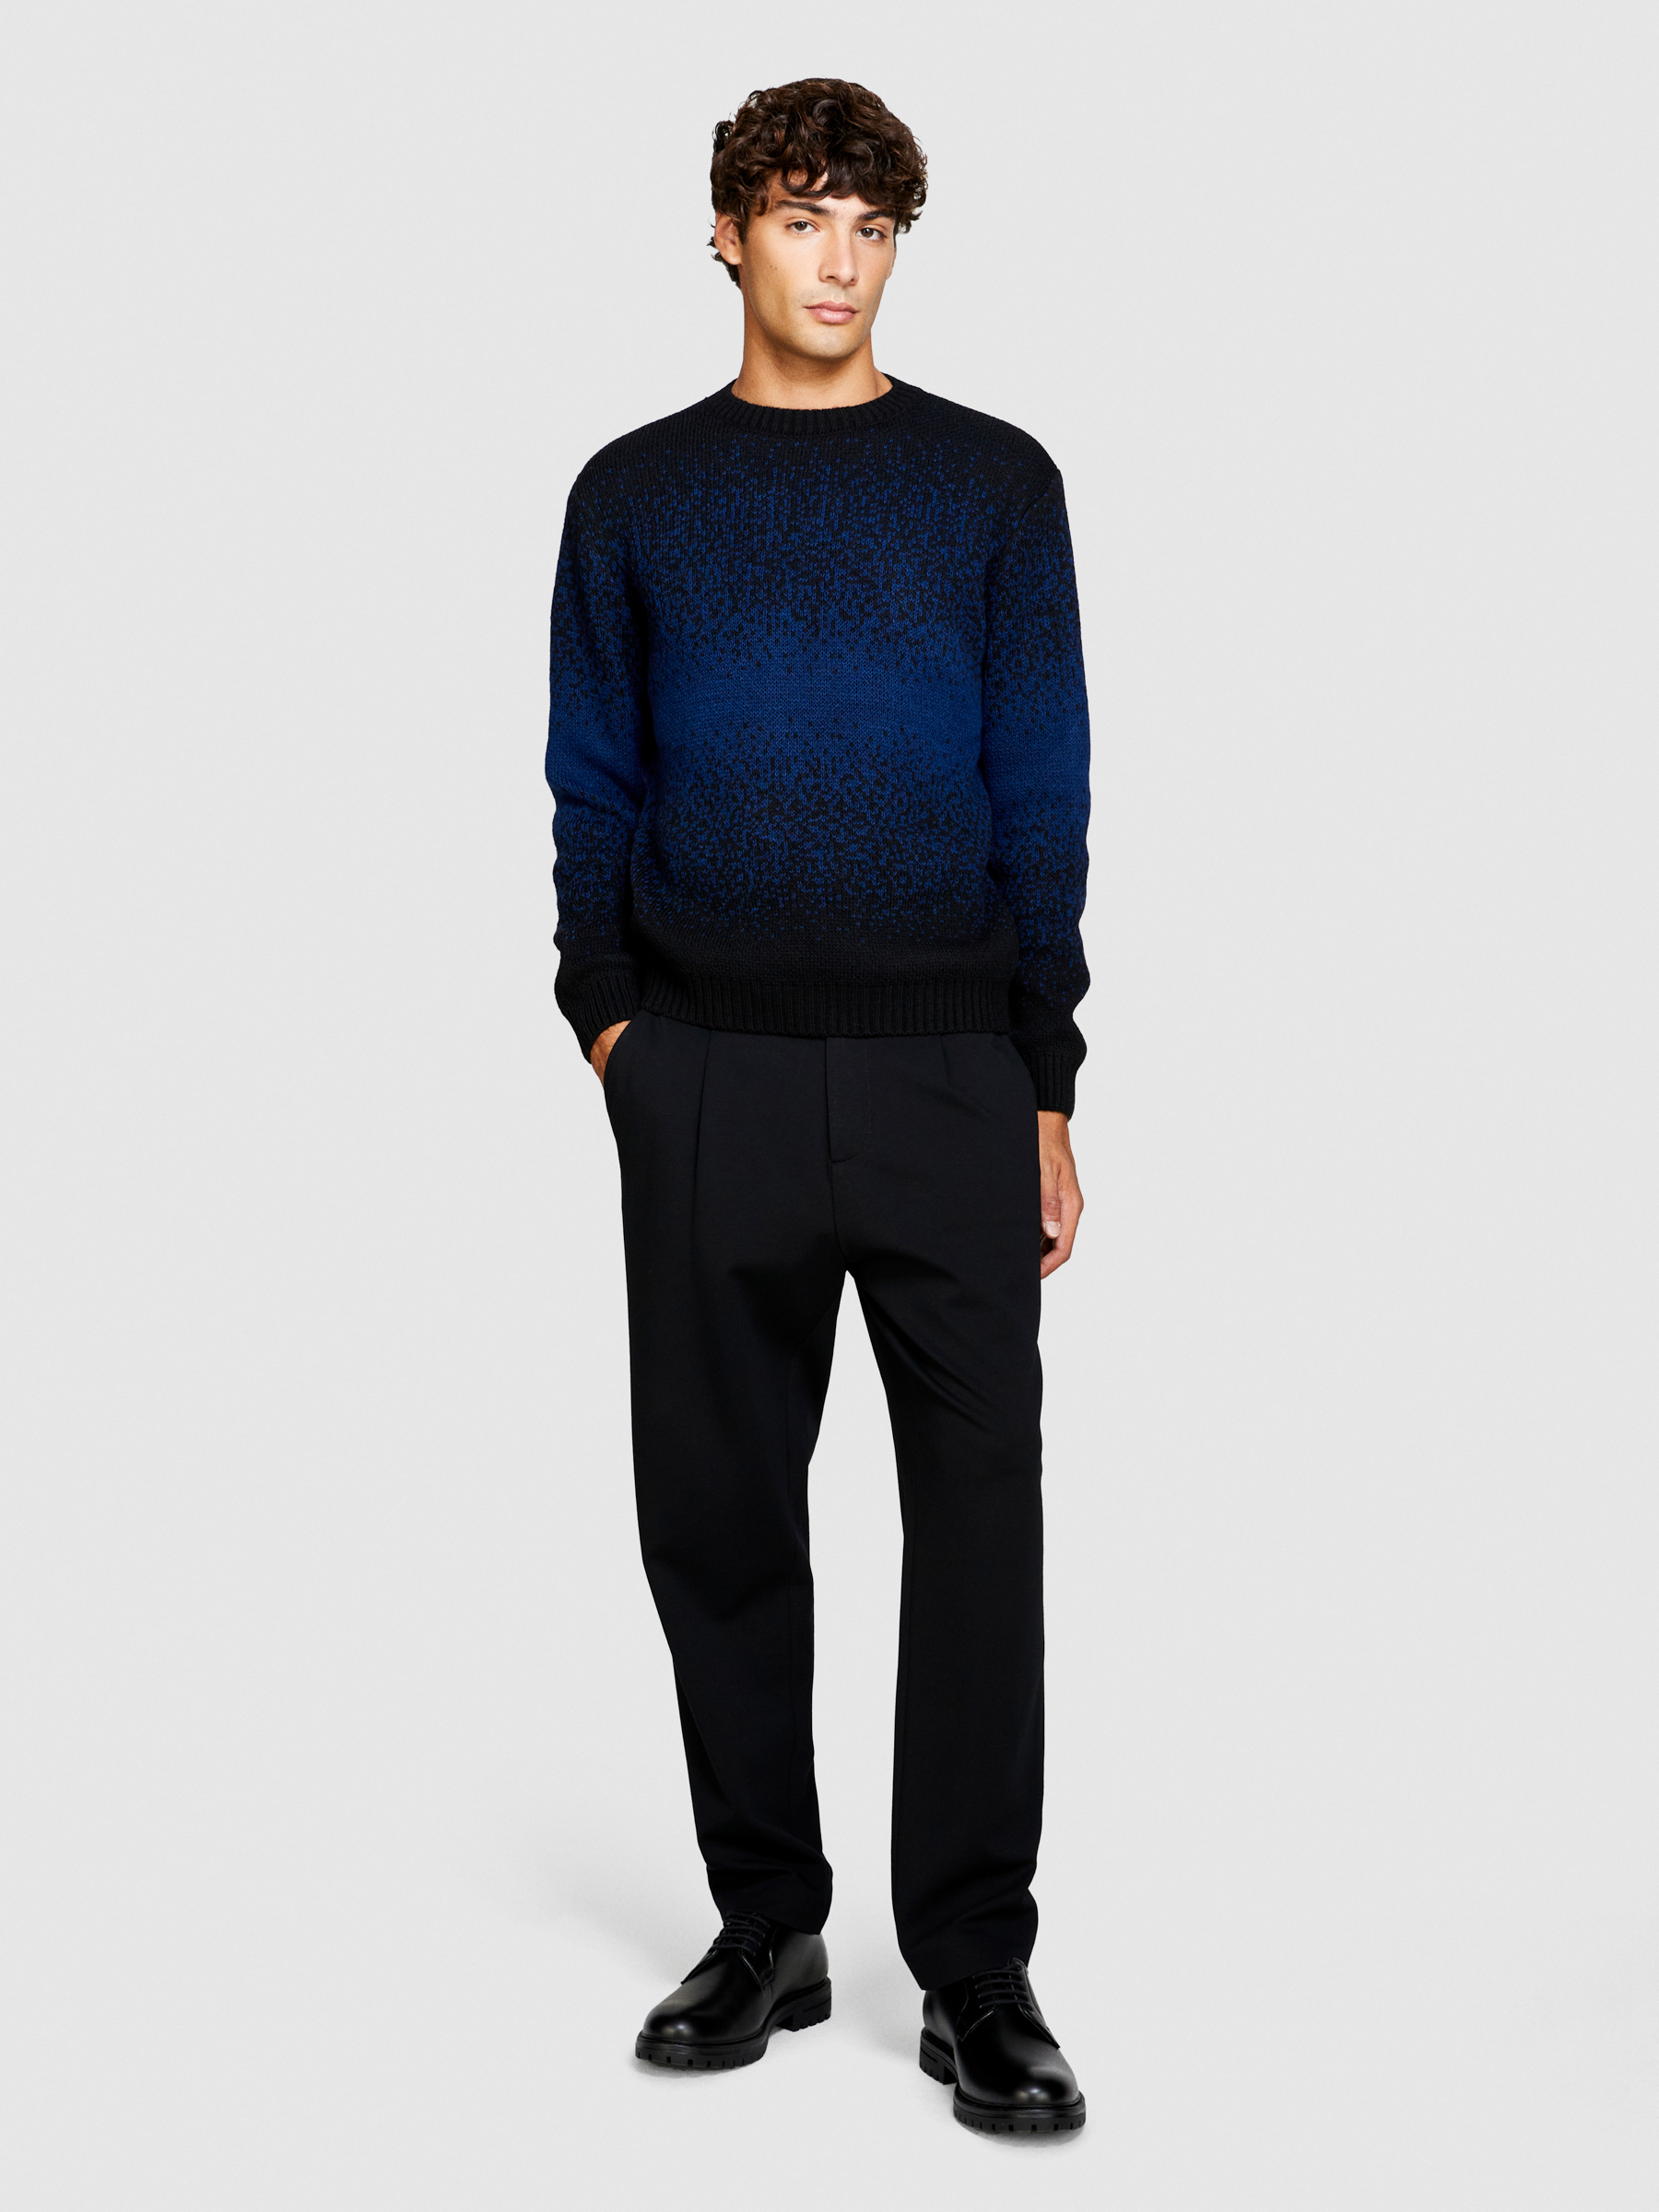 Sisley - Blurred Look Sweater, Man, Dark Blue, Size: M